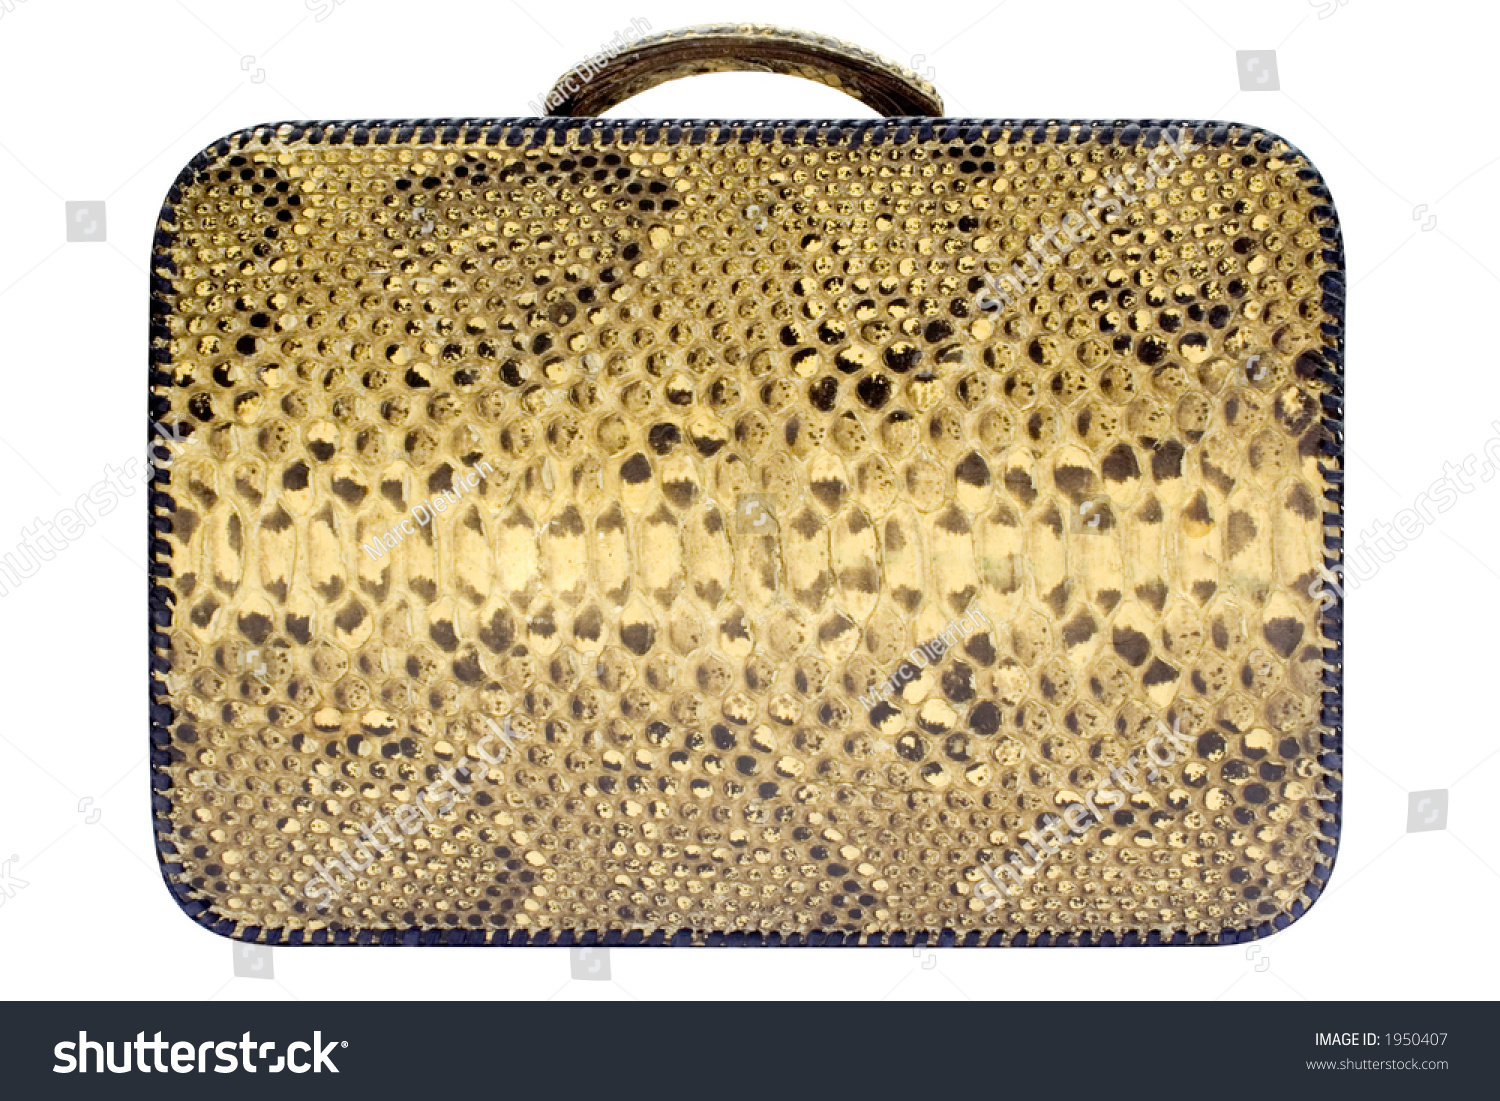 snakeskin side bag